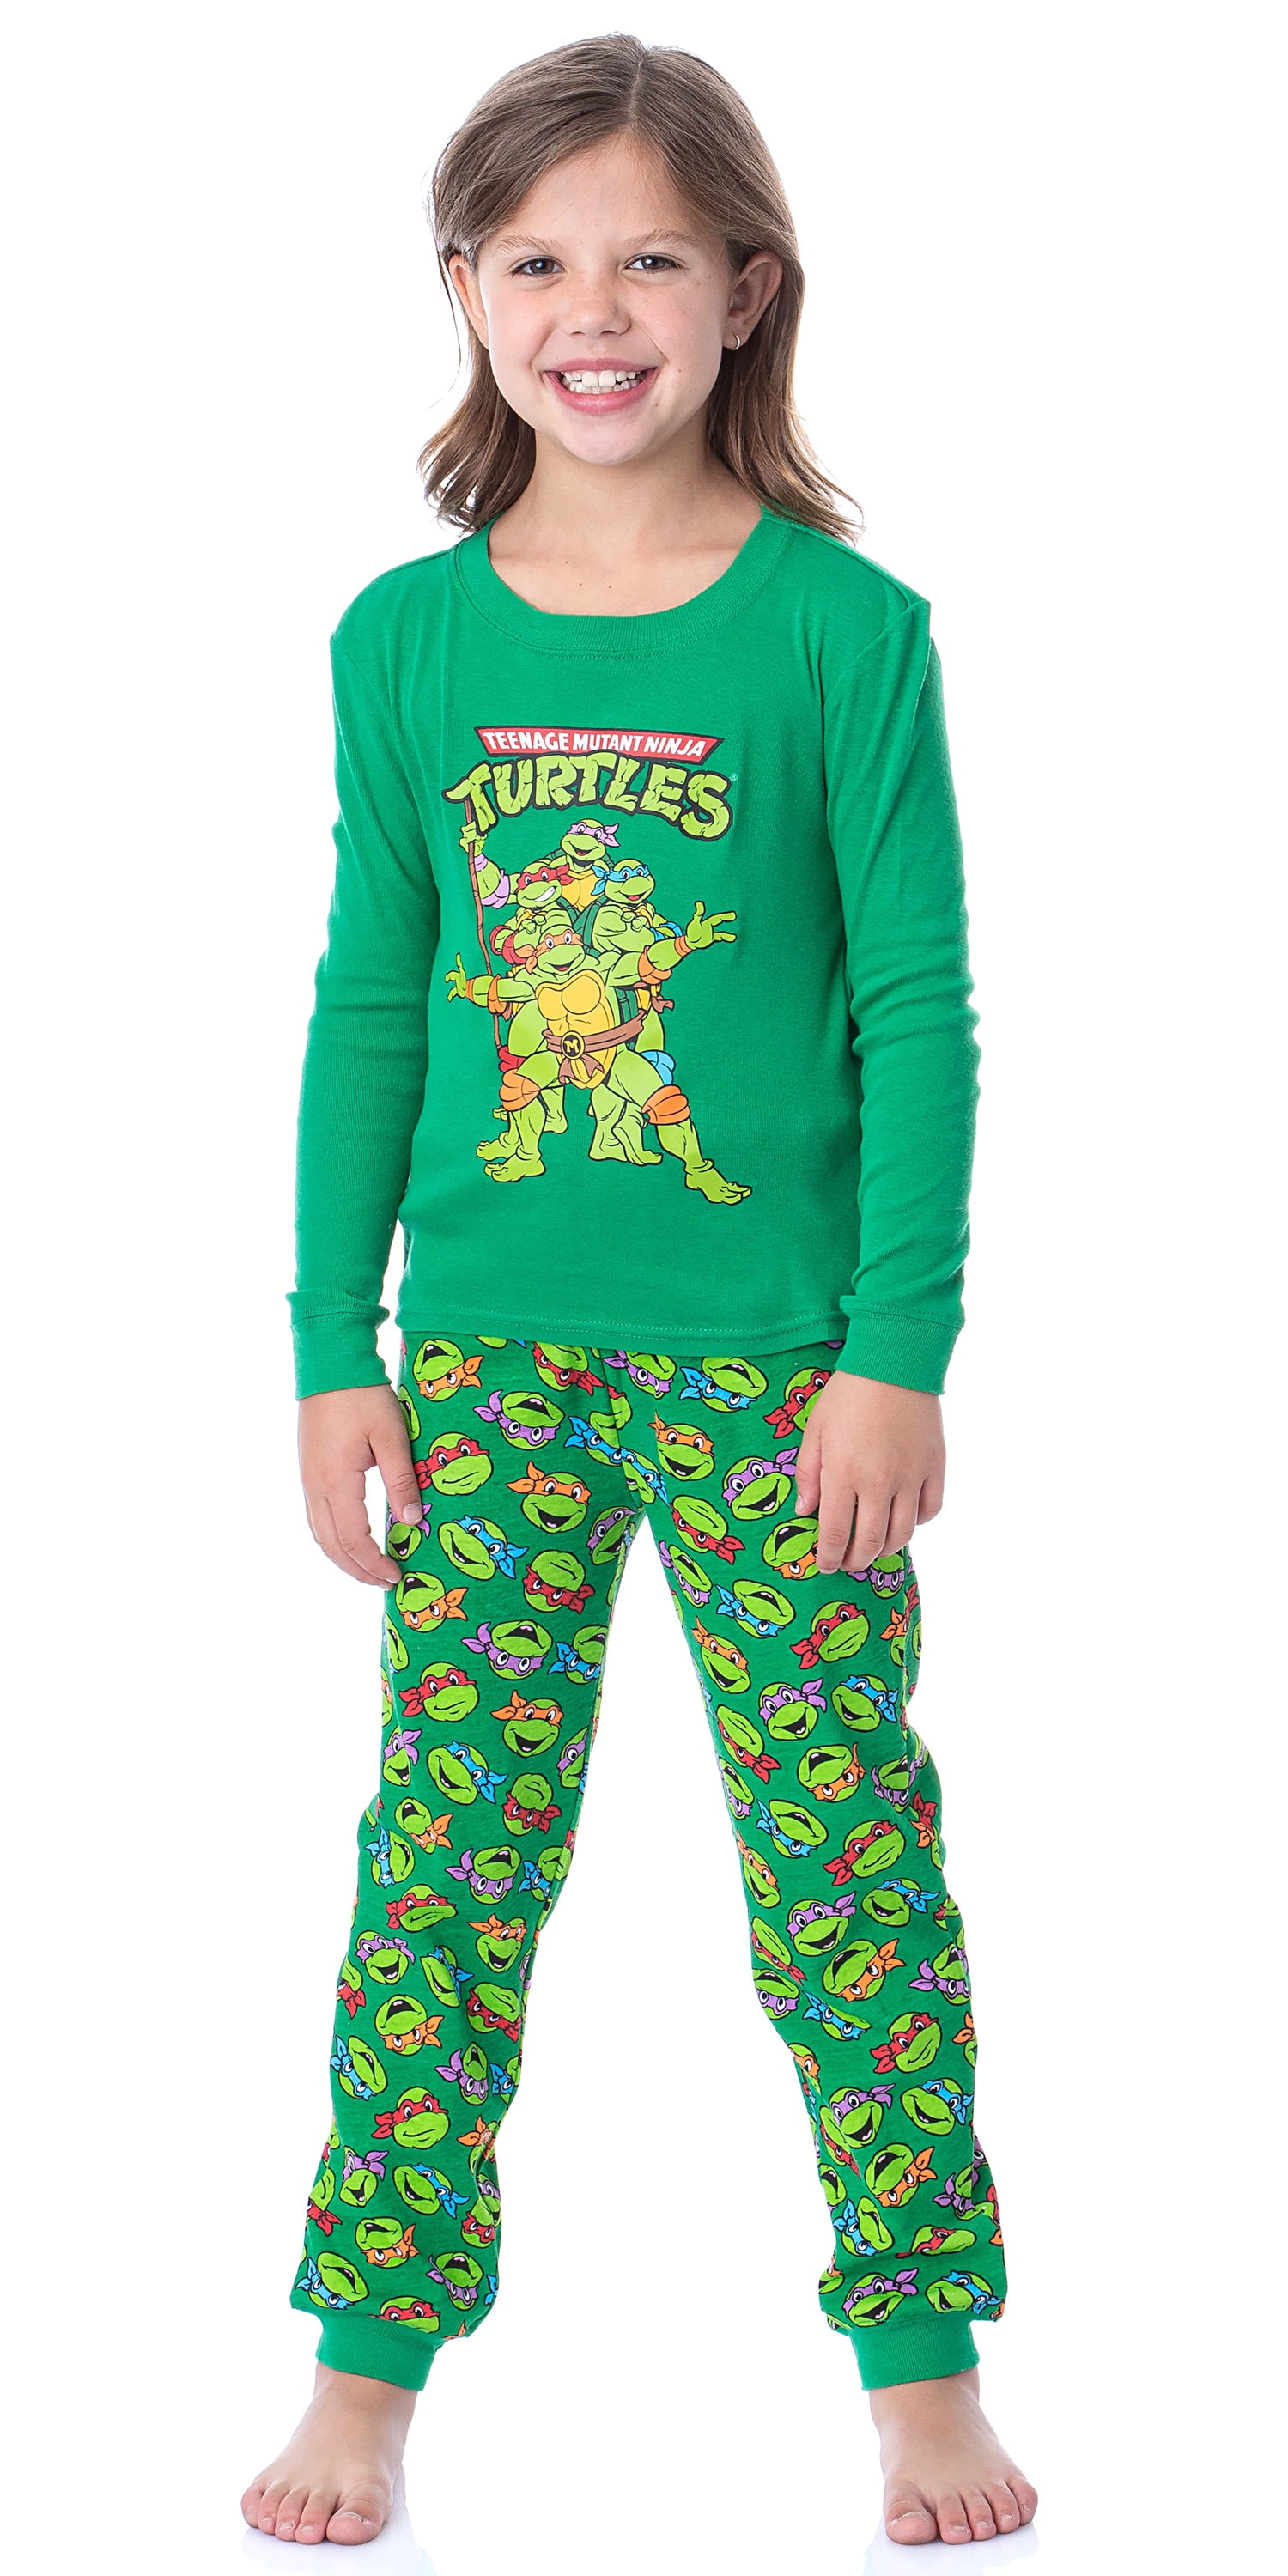 Nickelodeon Toddler Boys' Teenage Mutant Ninja Turtles Jogger Pajama Set (4T)  